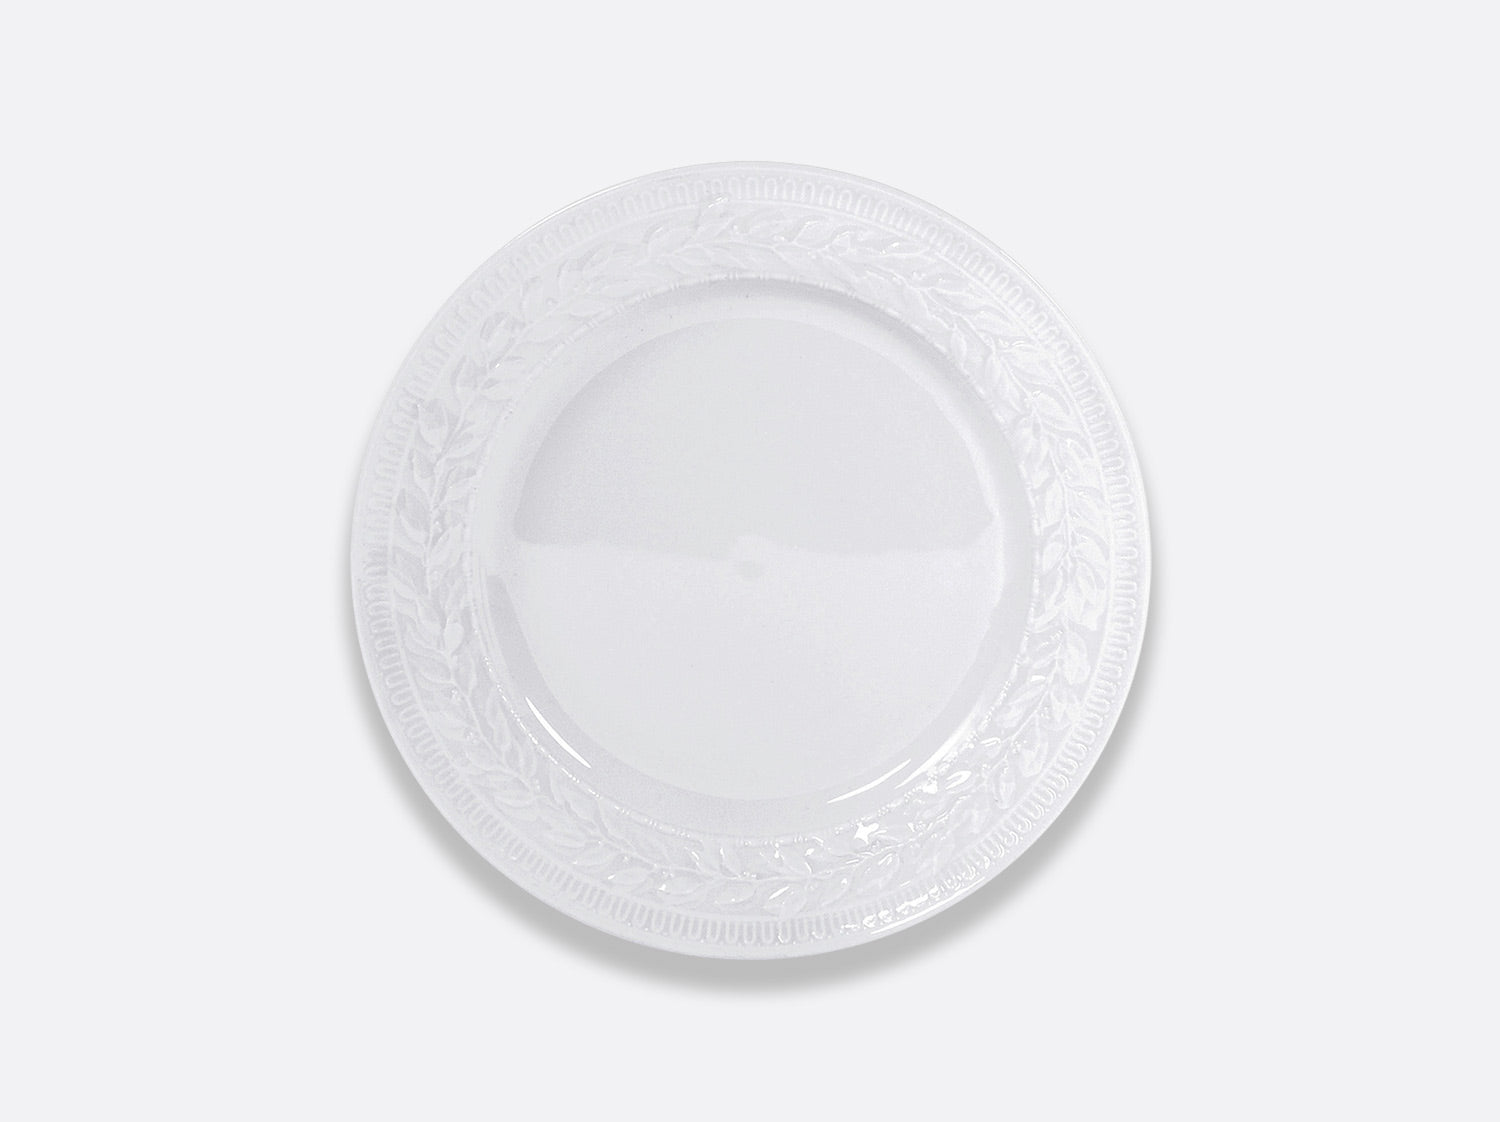 Louvre Salad Plate